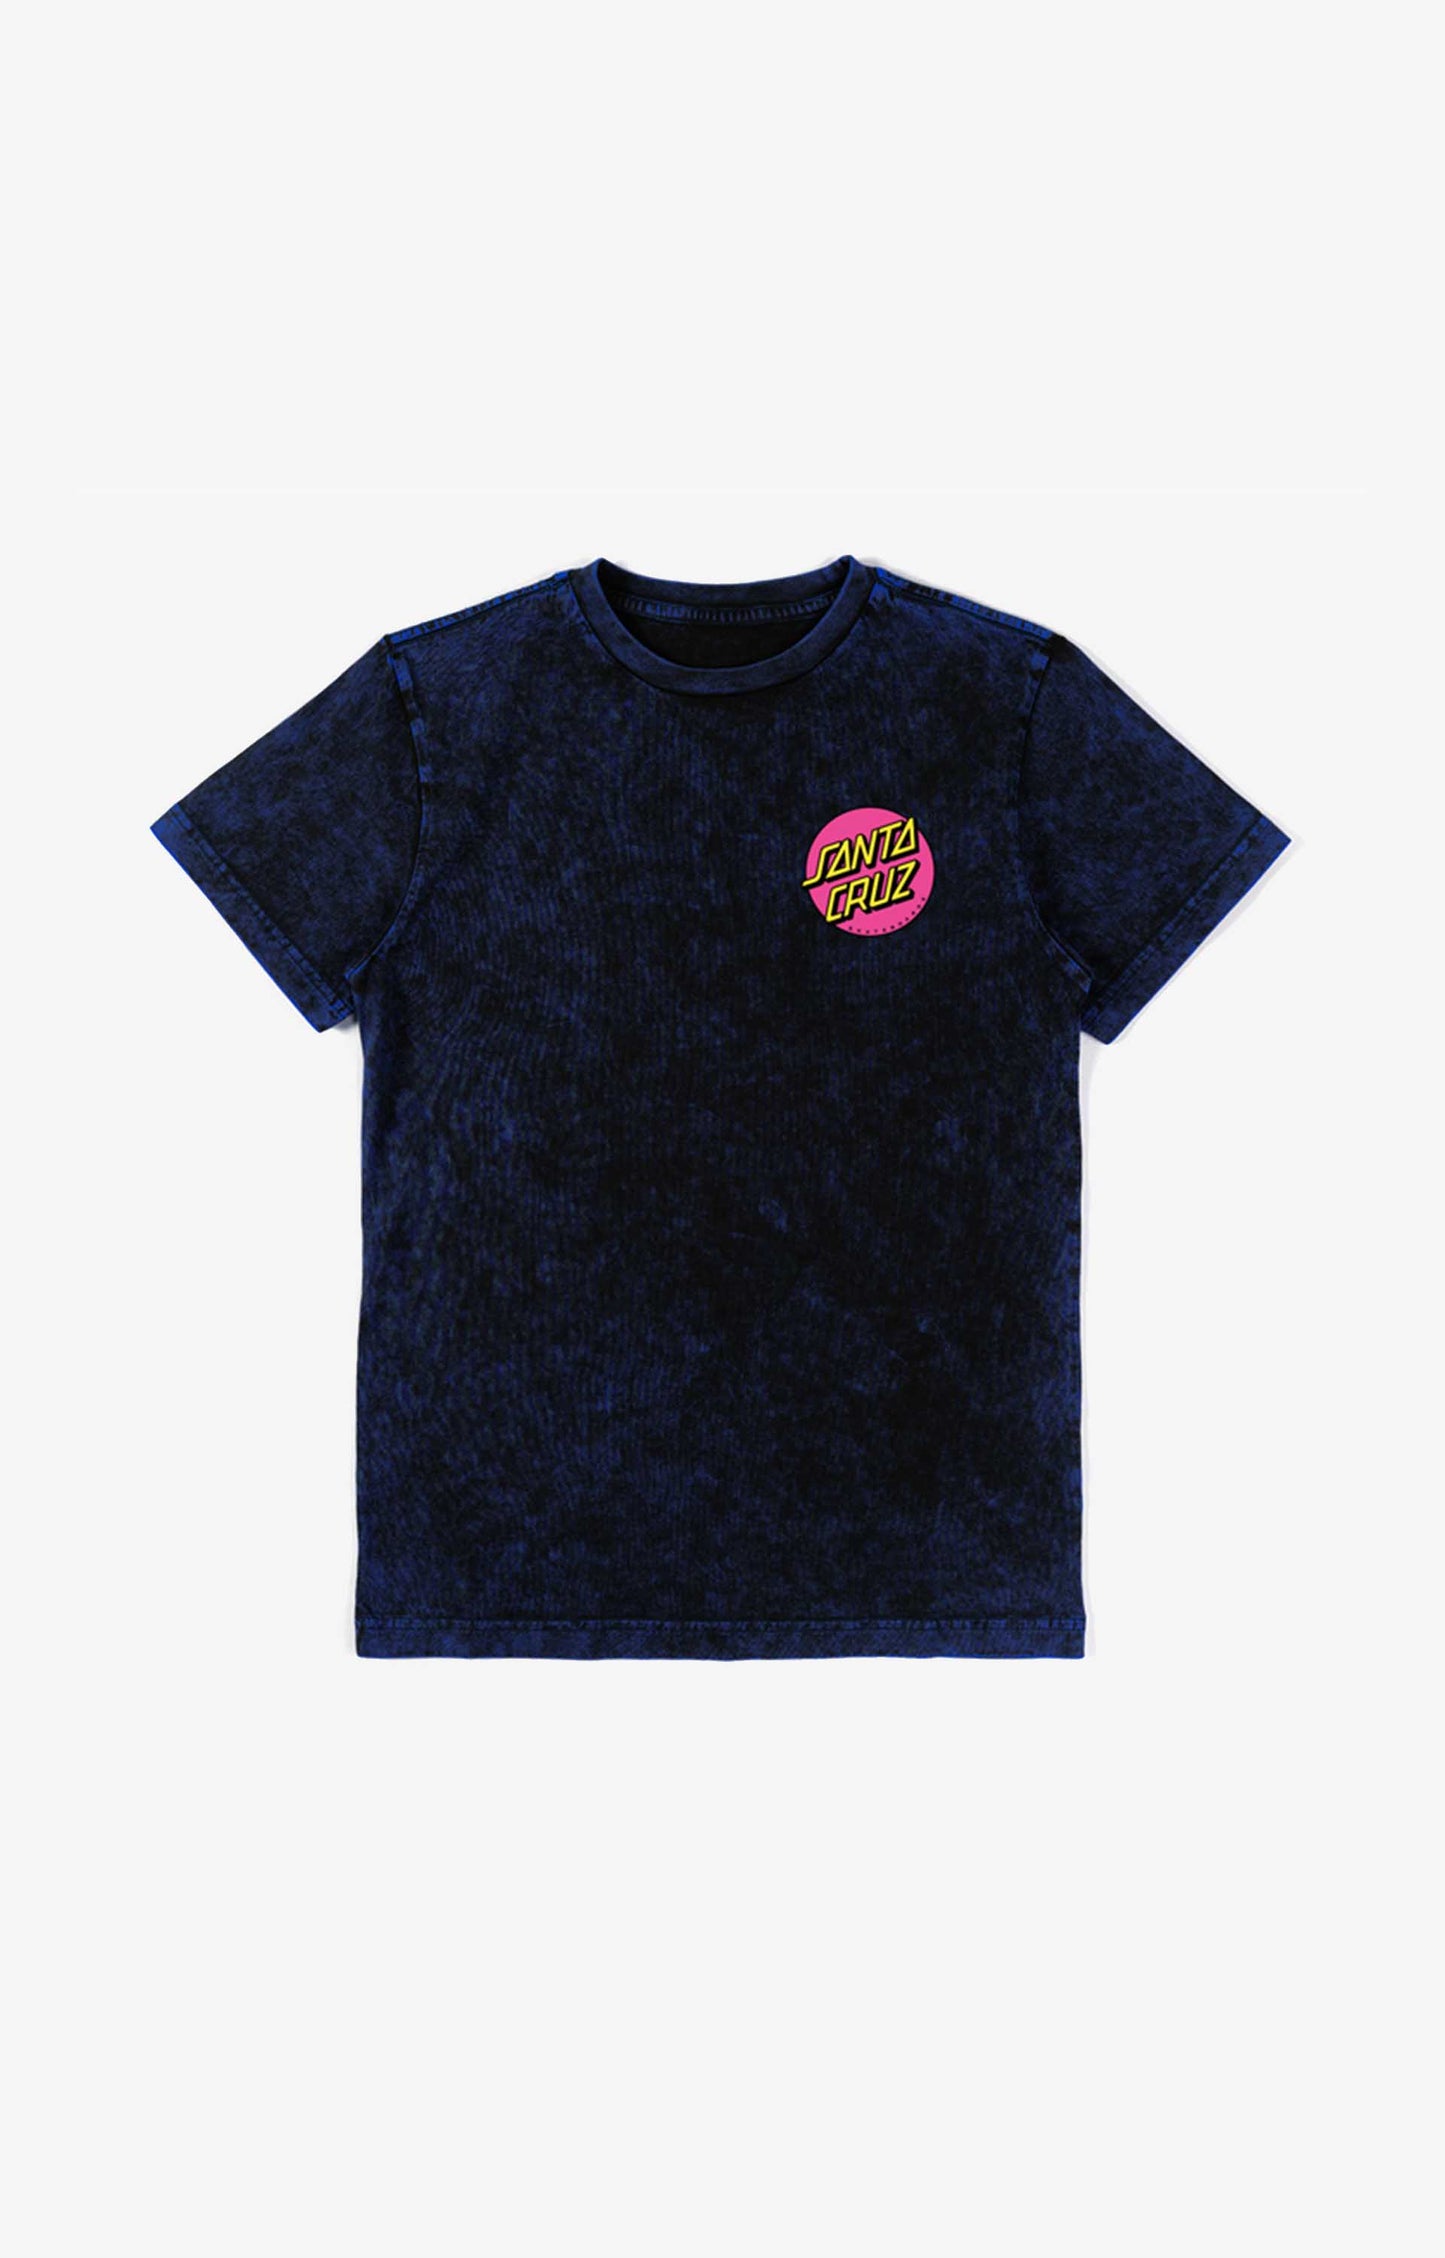 Santa Cruz Kendall Pure Style Youth T-Shirt, Acid Navy